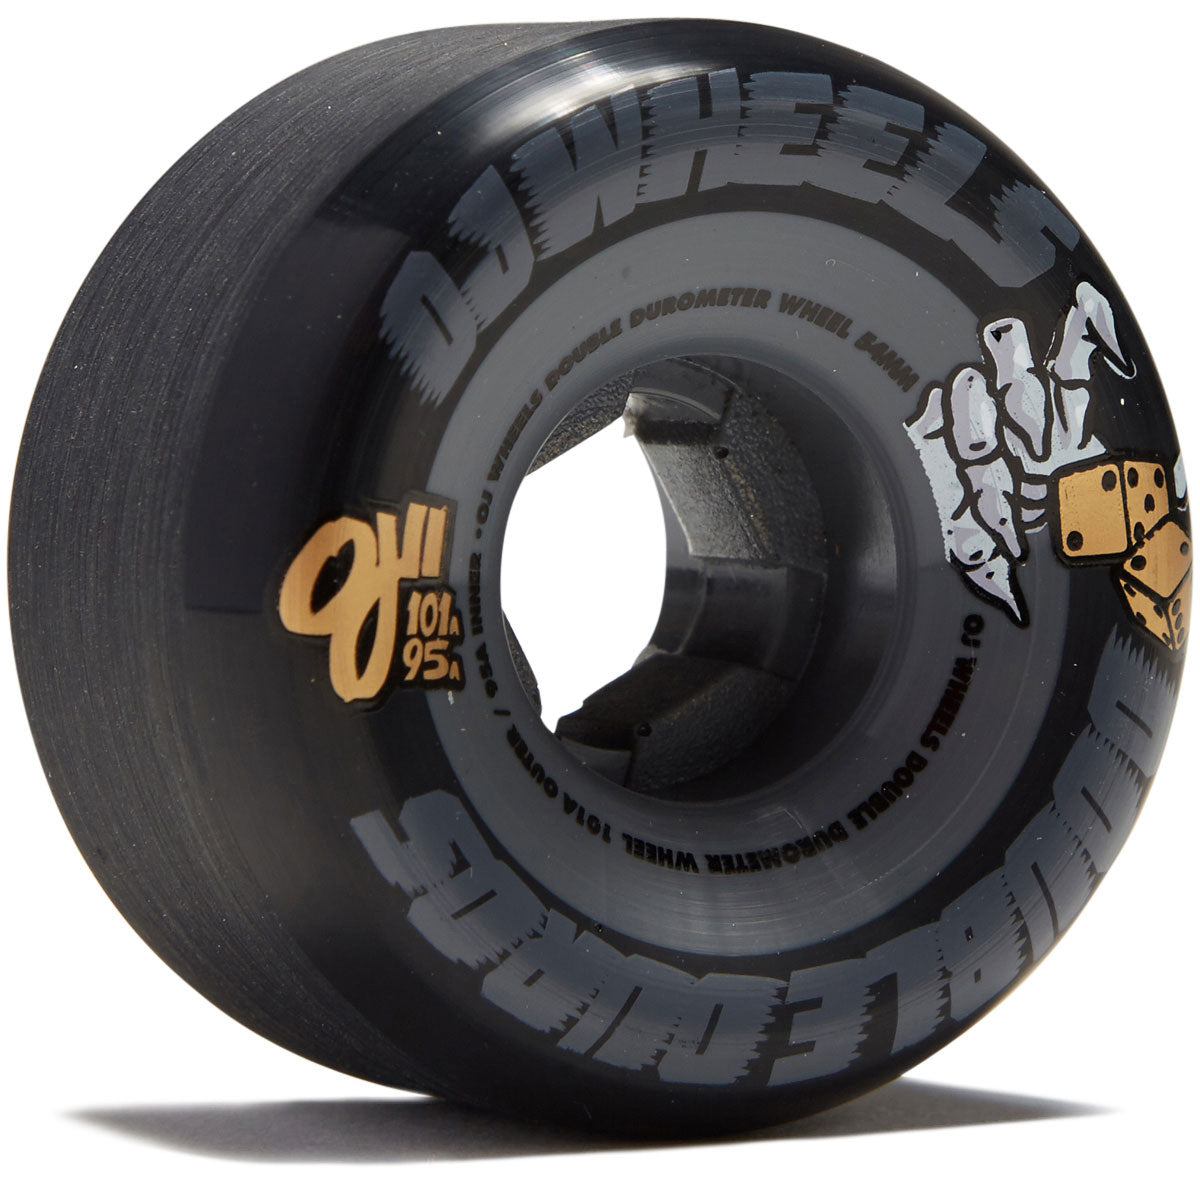 OJ Double Duro 101a/95a Skateboard Wheels - Black/Grey - 54mm image 1